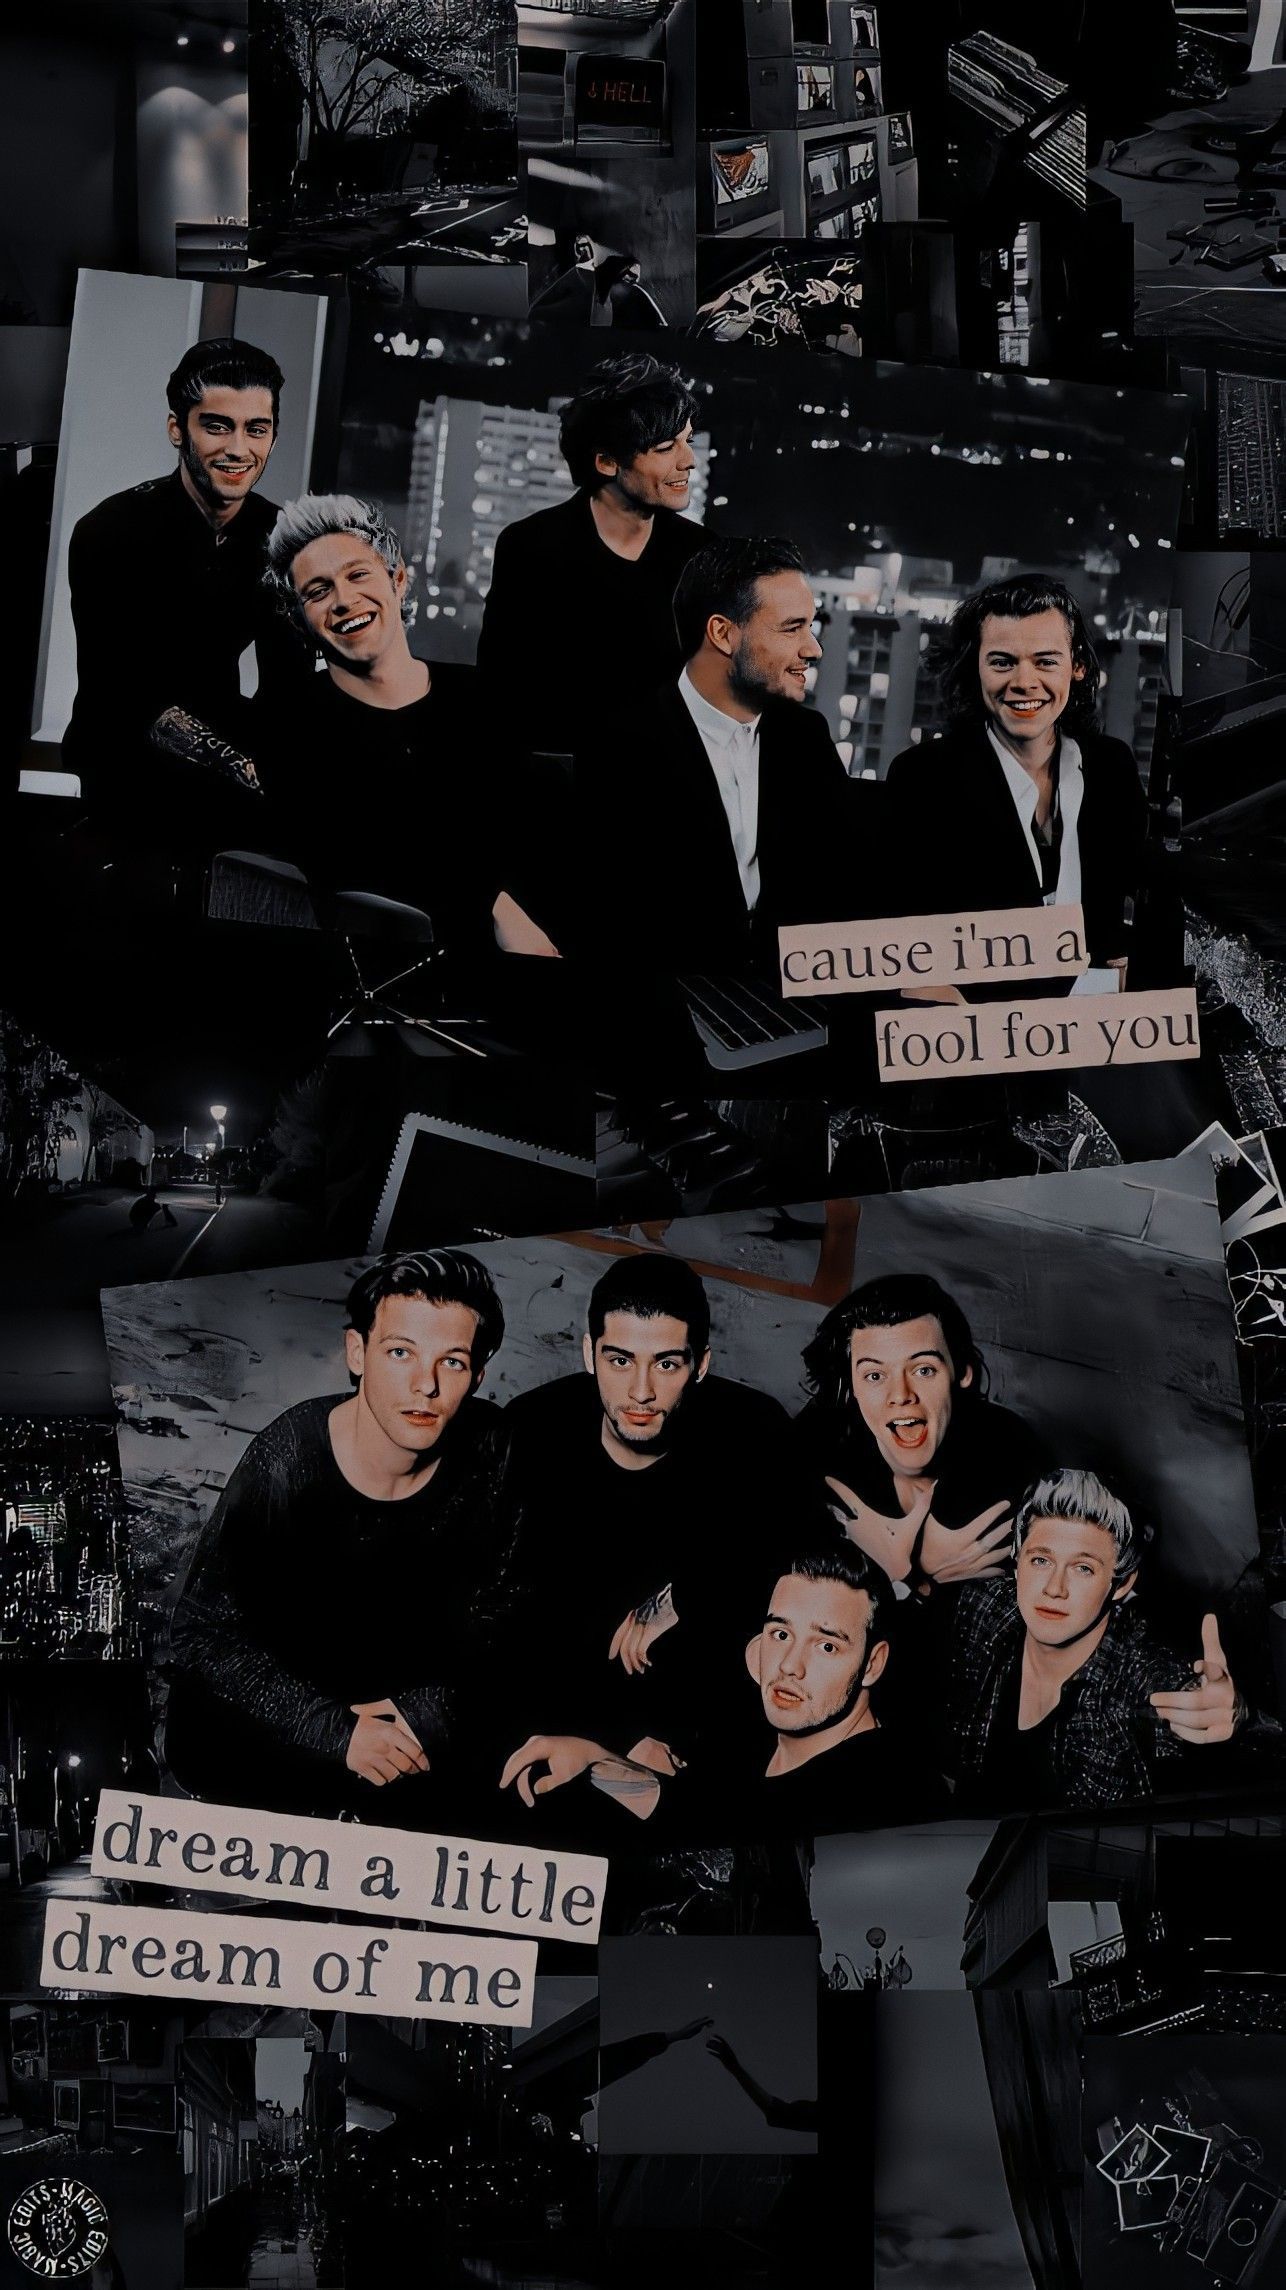 Lockscreen Wallpaper Aesthetic One Direction. One direction collage, One direction image, One direction lockscreen